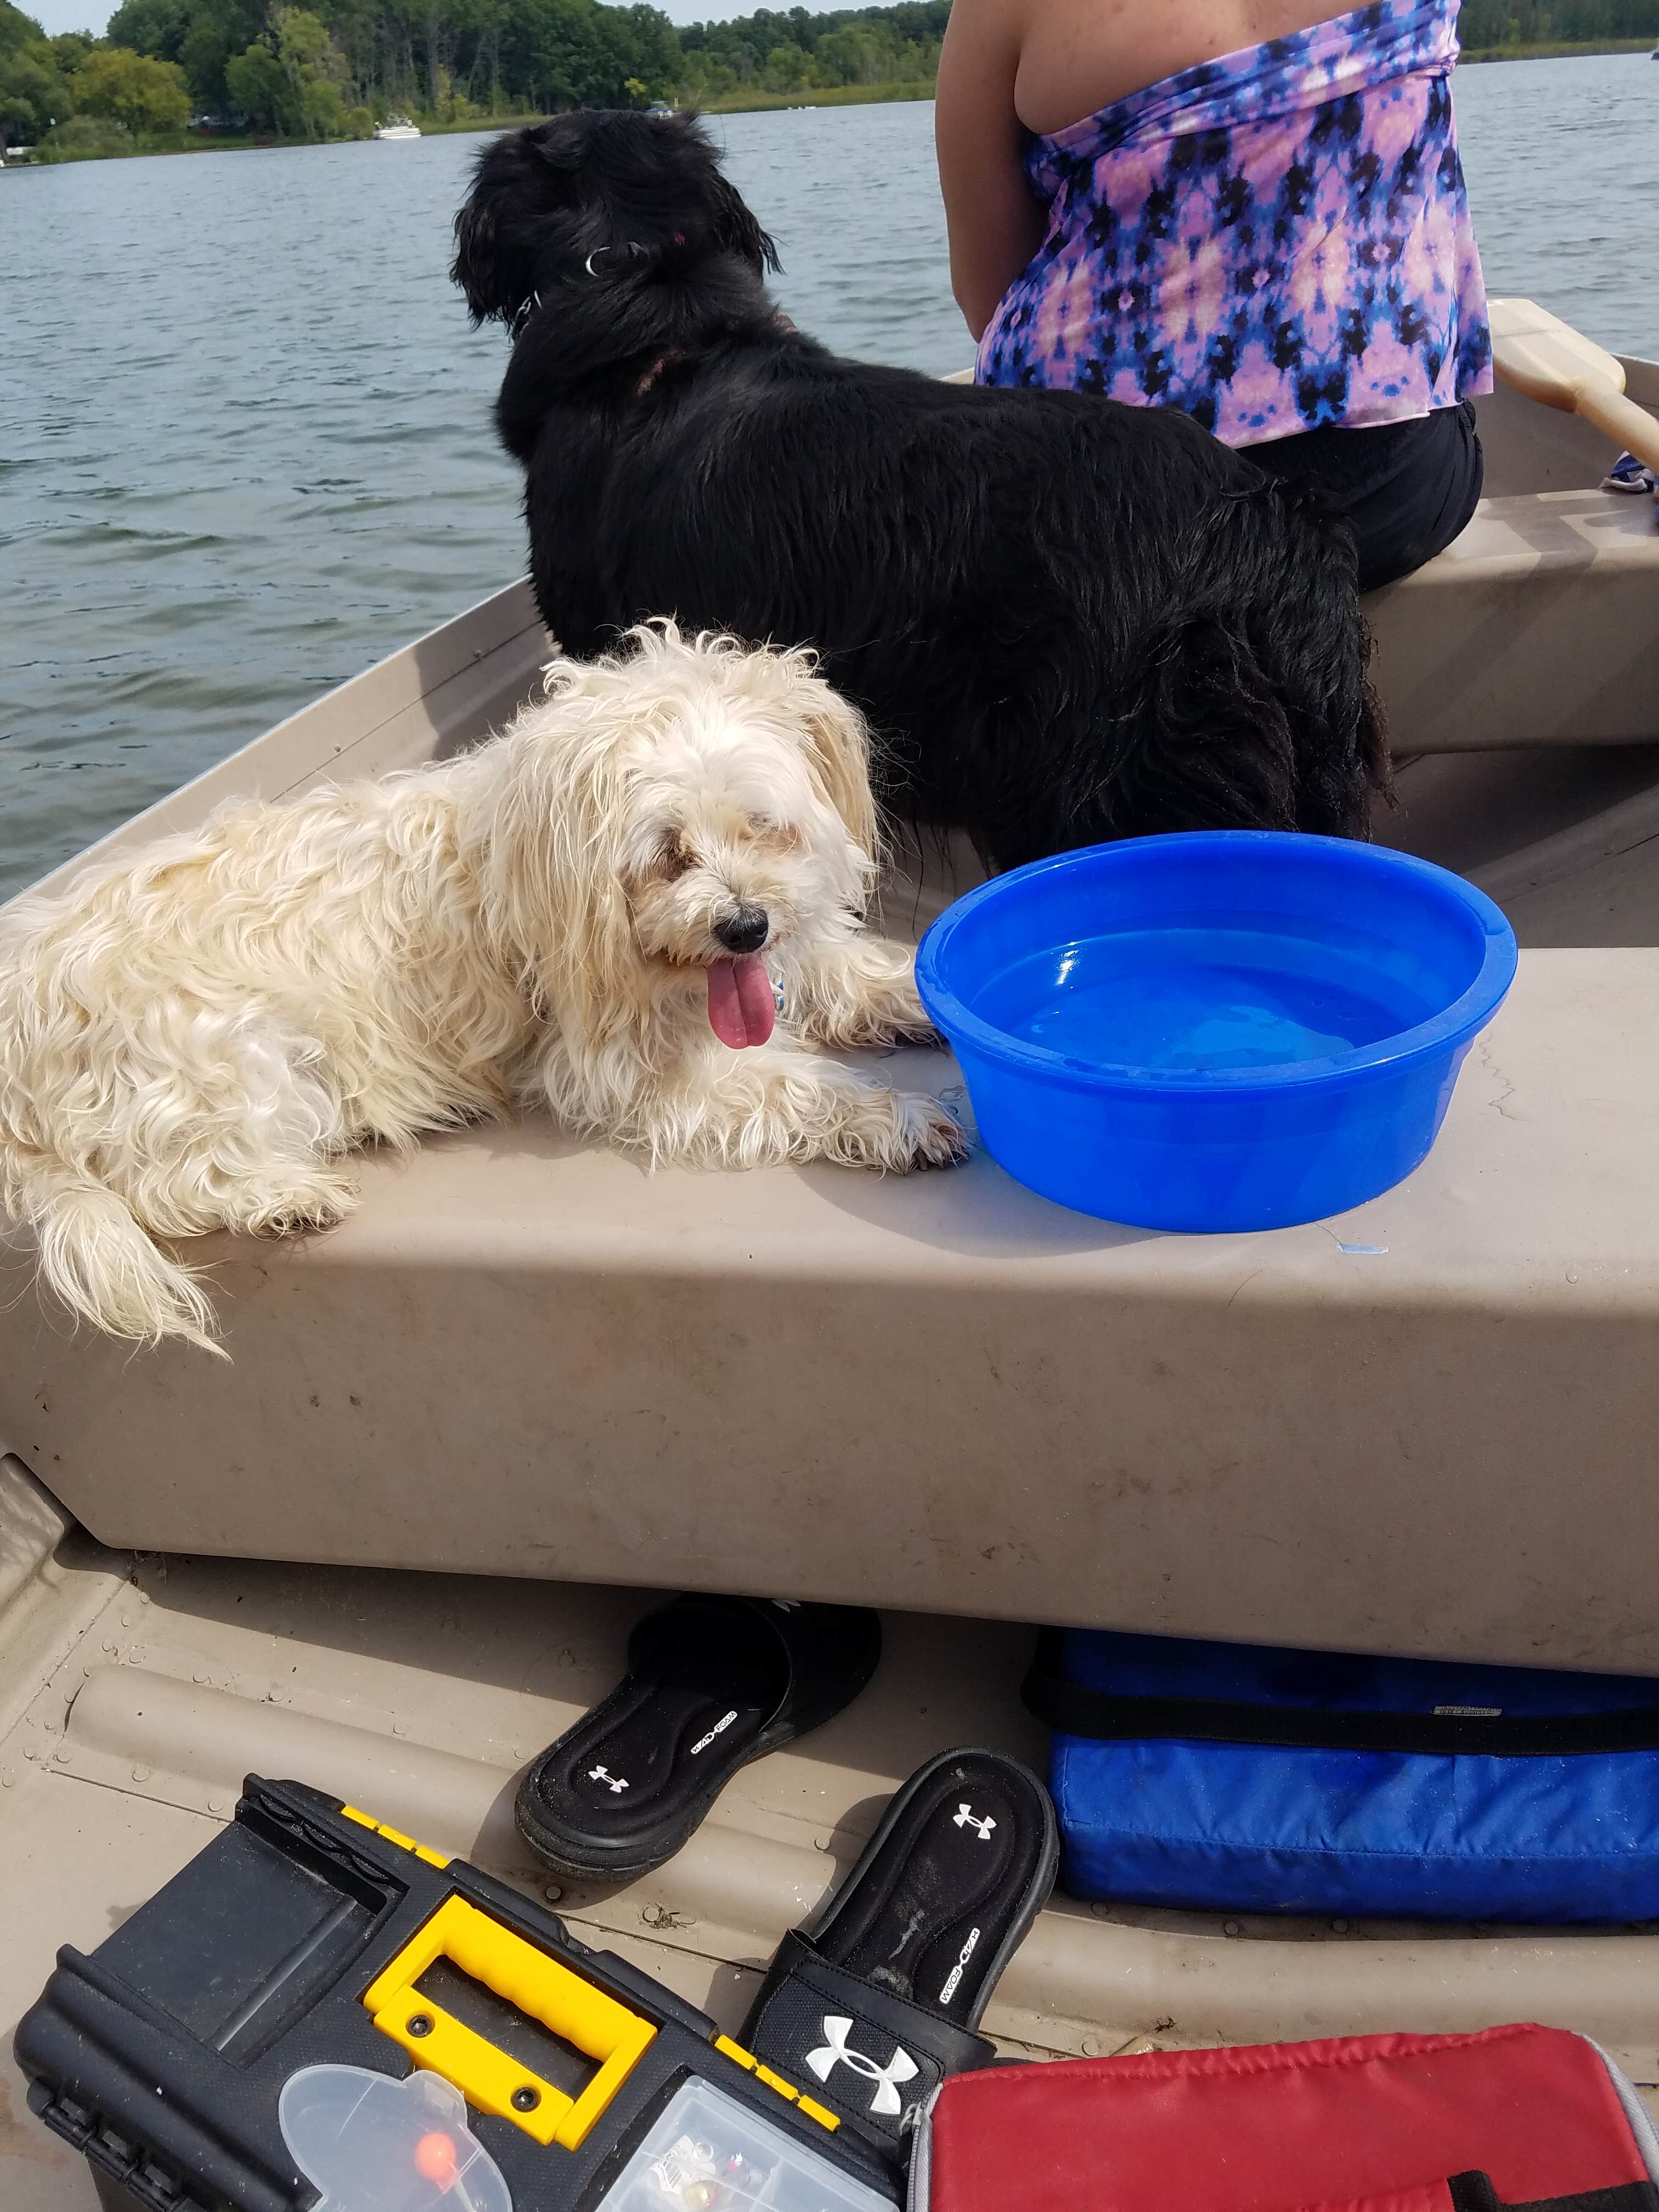 Dogos having fun on the row boat